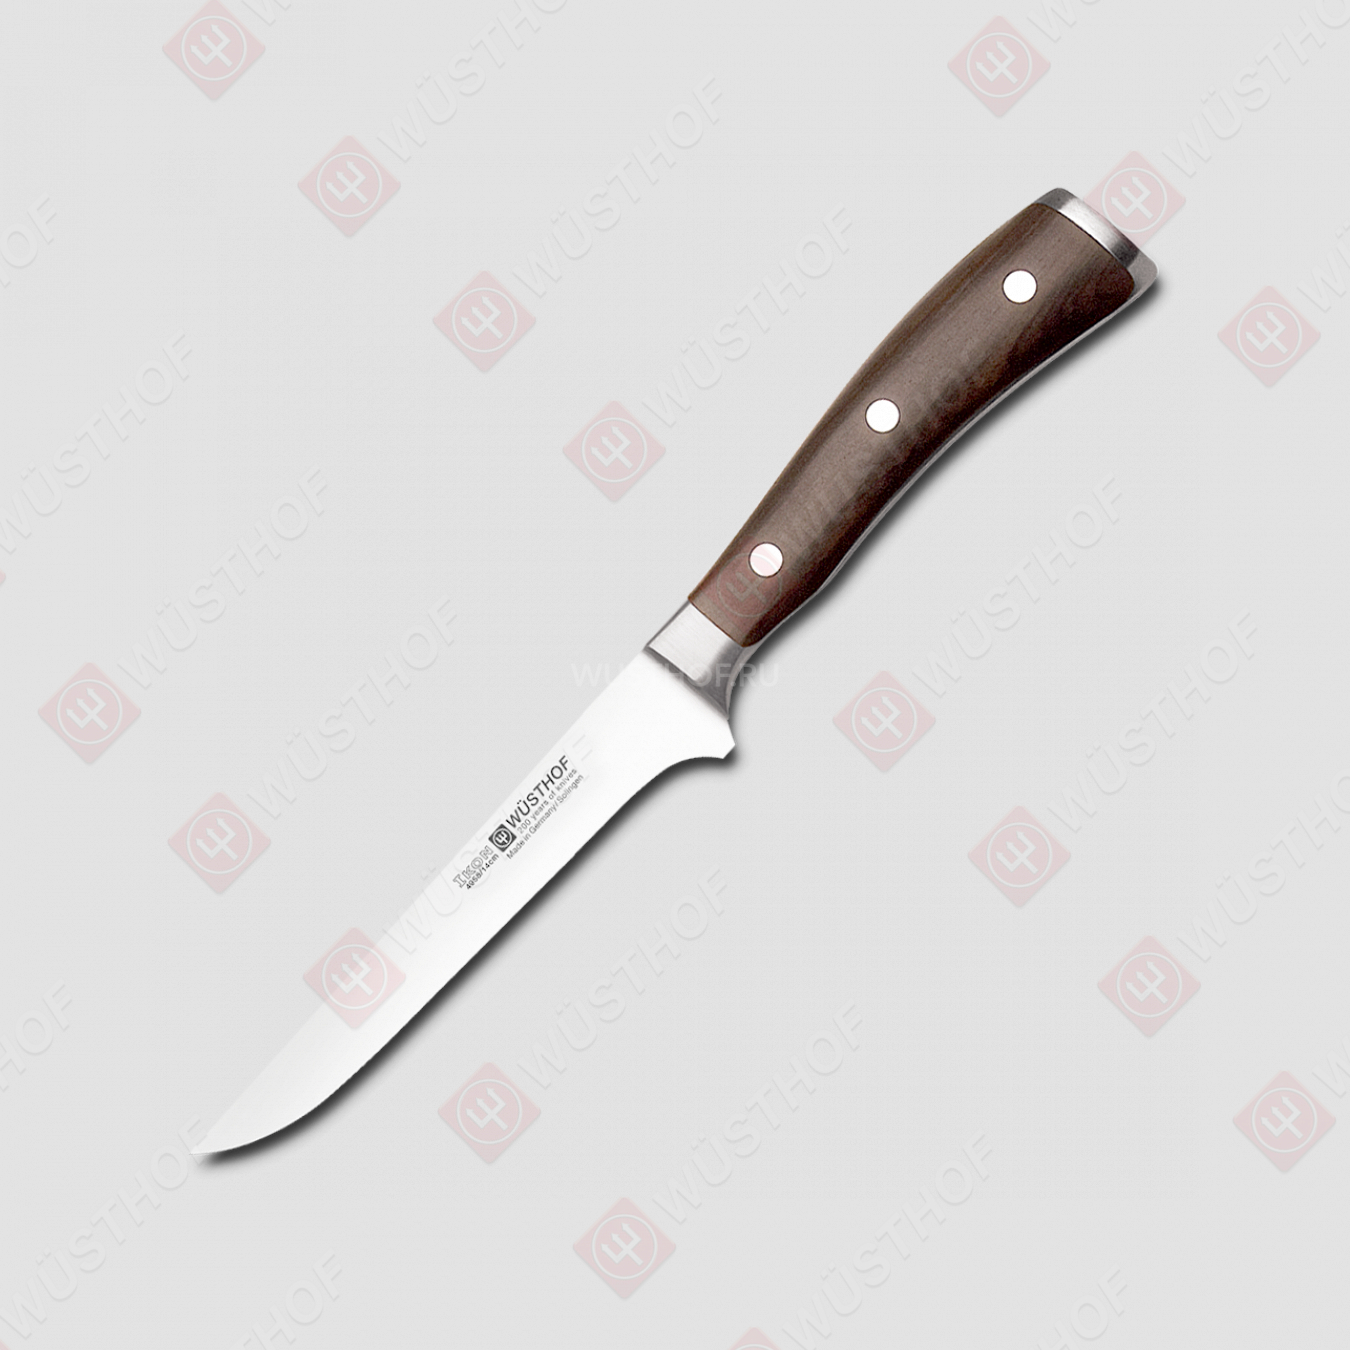 Нож кухонный обвалочный 14 см, серия Ikon, WUESTHOF, Золинген, Германия